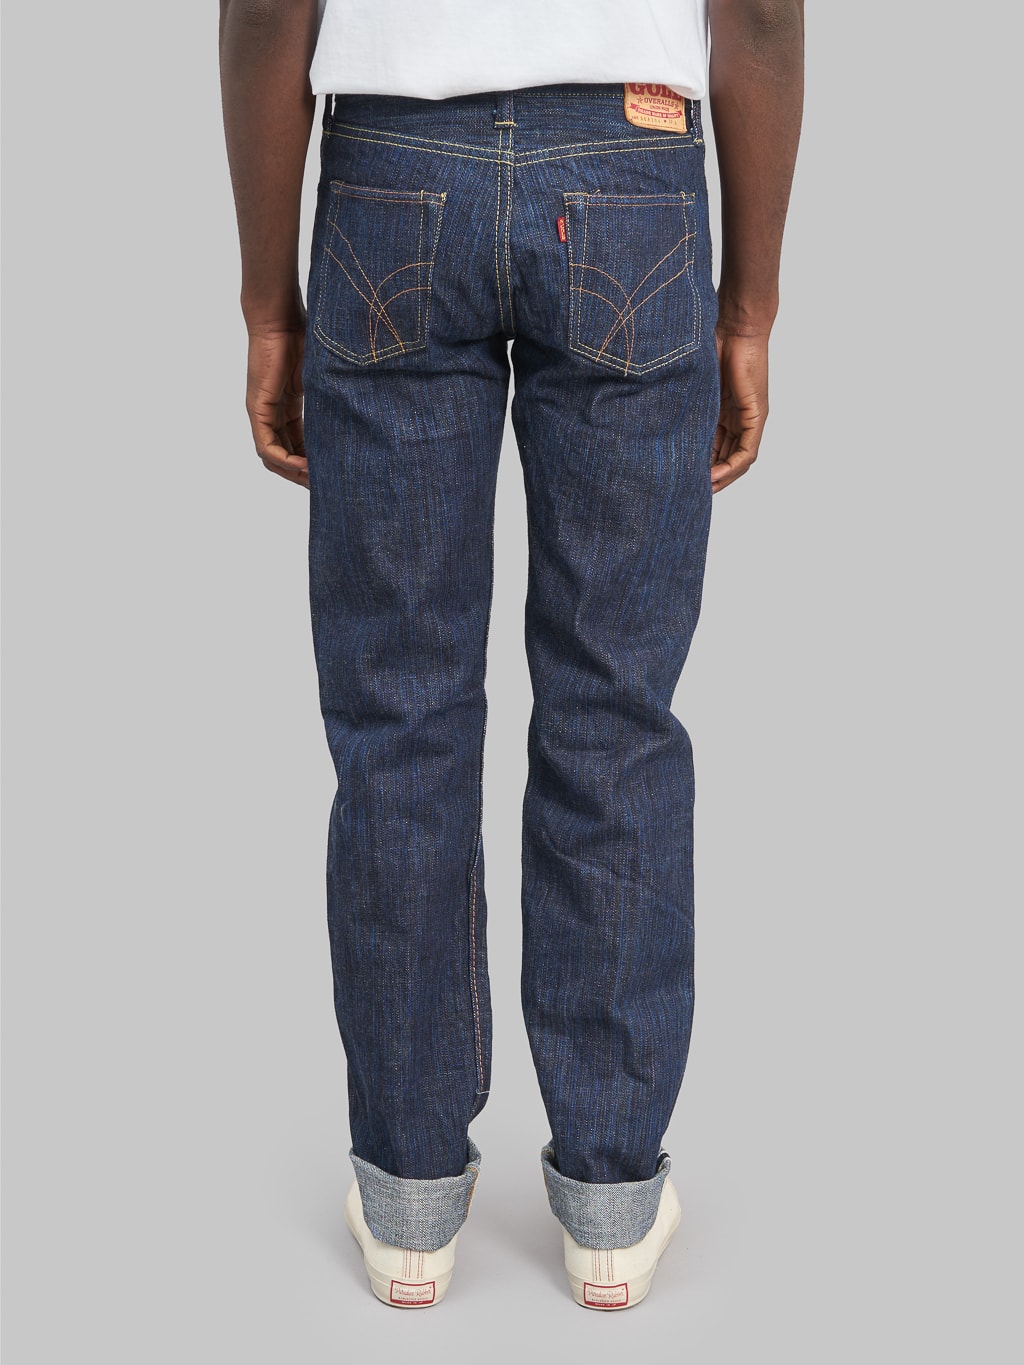 The Strike Gold 8104 Shower Slub straight tapered jeans back rise